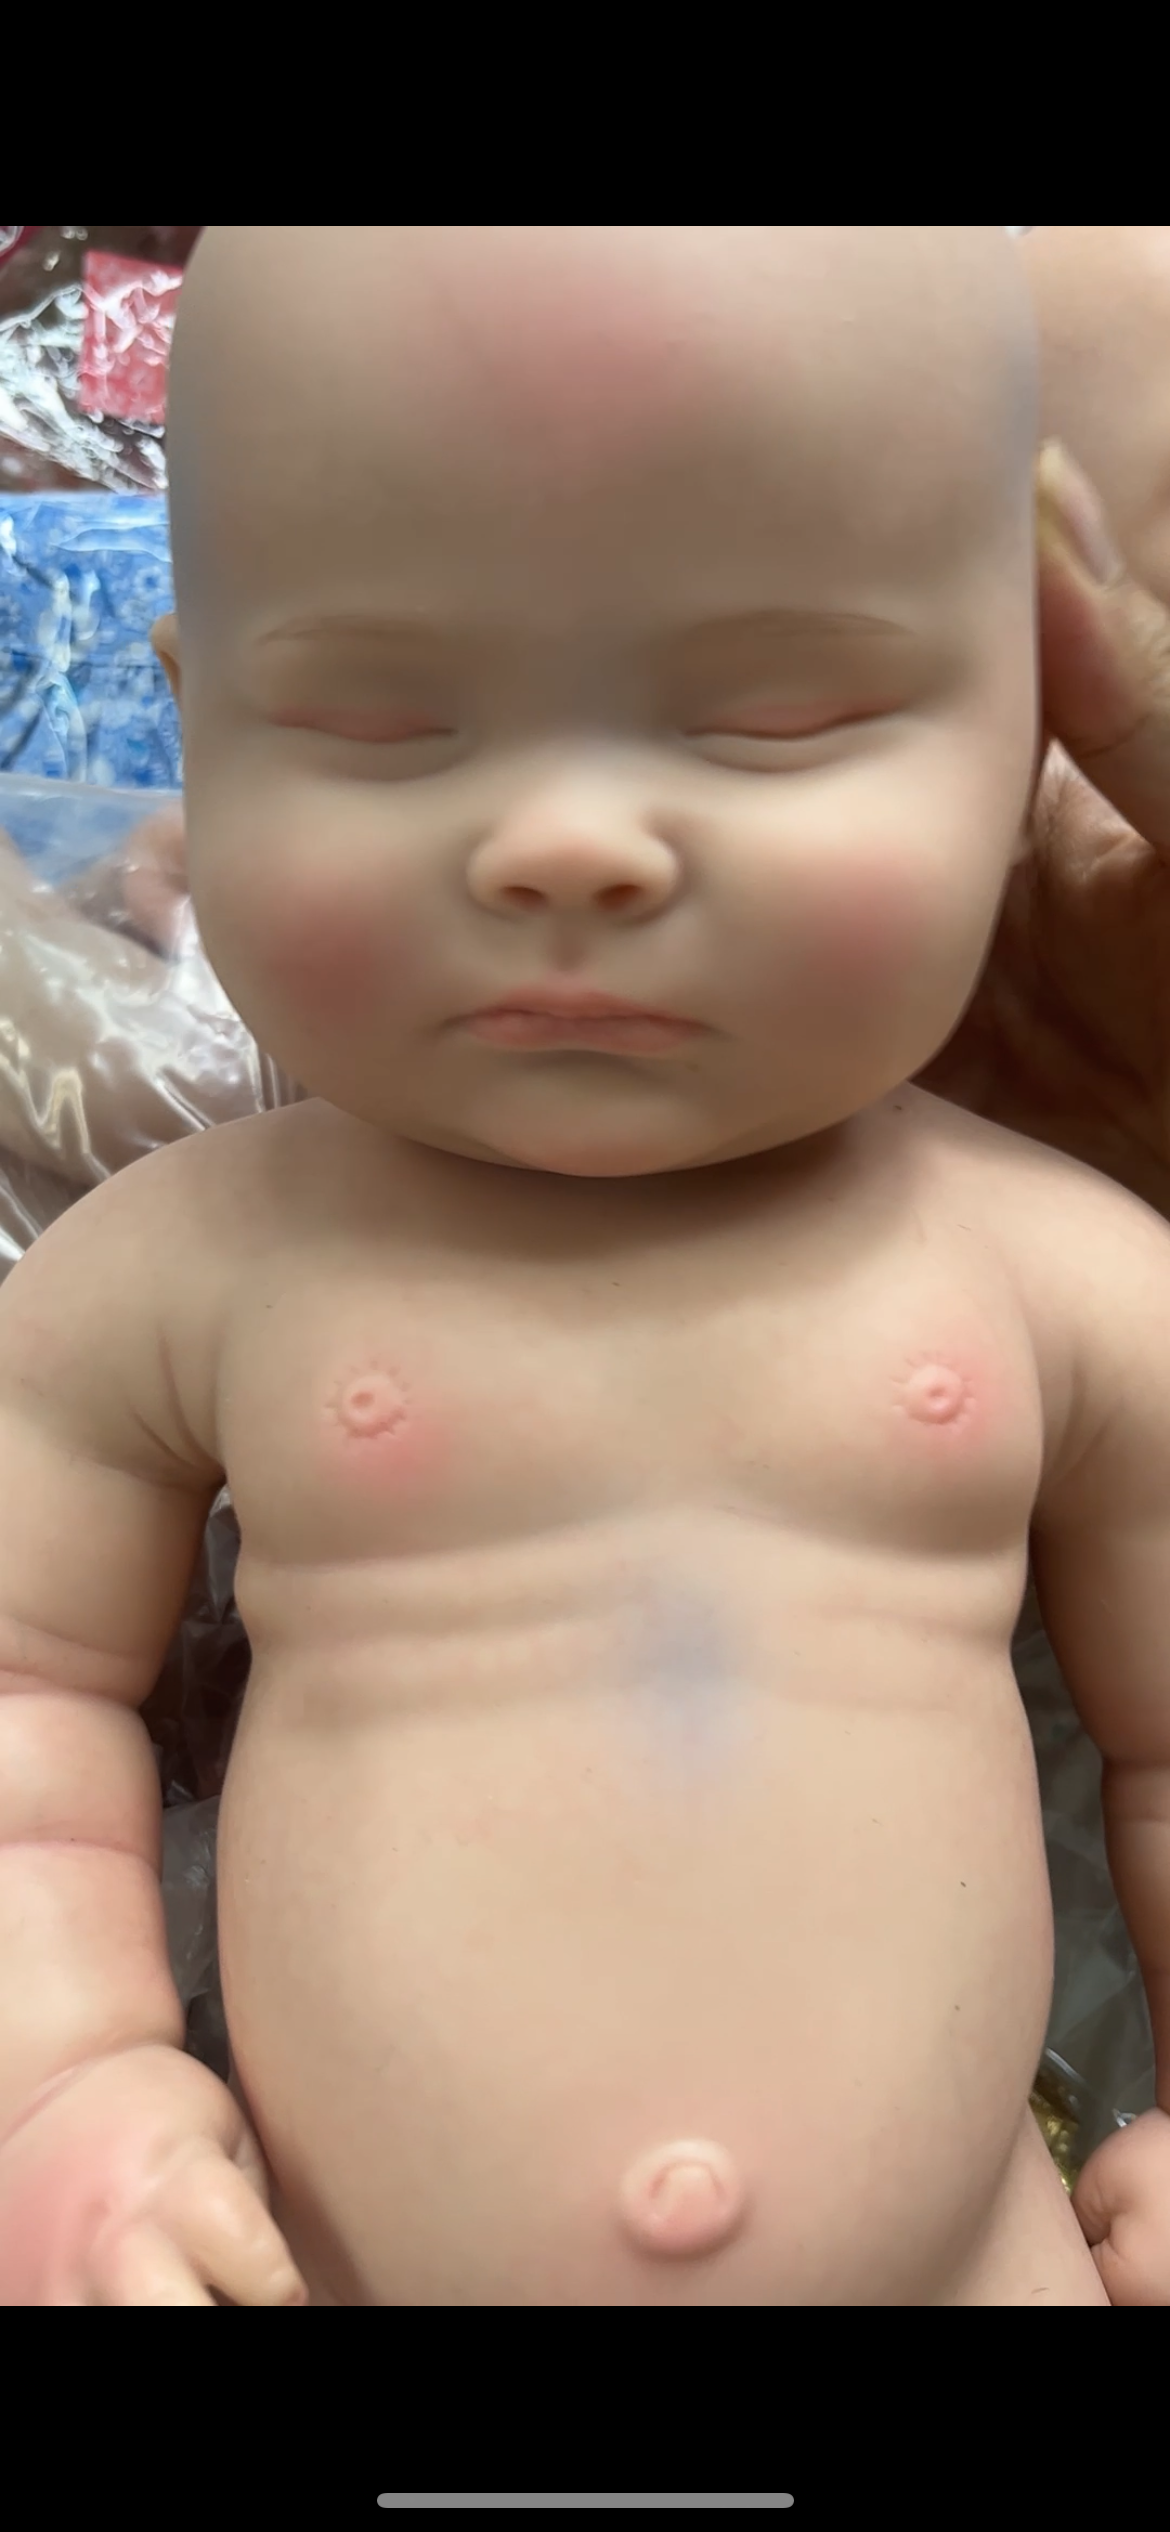 18Soft Full Body Solid Silicone Bebe Reborn Doll Handmade Artist Painted  Girl Bebê Reborn De